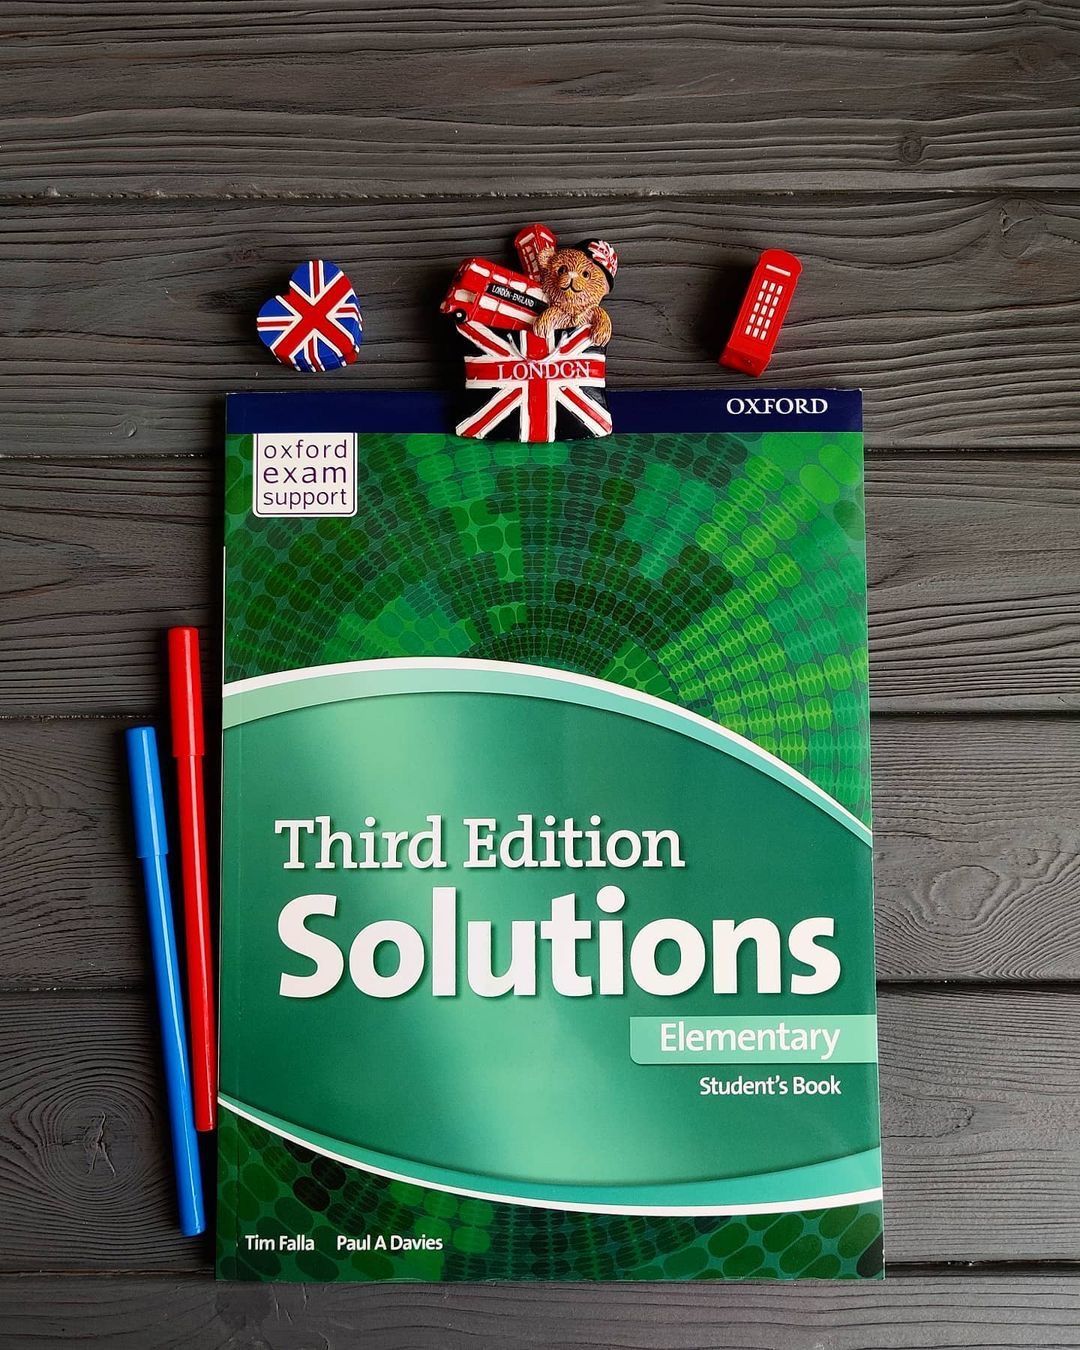 Solutions 3 edition elementary books. Solutions учебник. Учебник Солюшенс элементари. Solution Elementary students book 3 Edition. Third Edition solutions Elementary student's book.